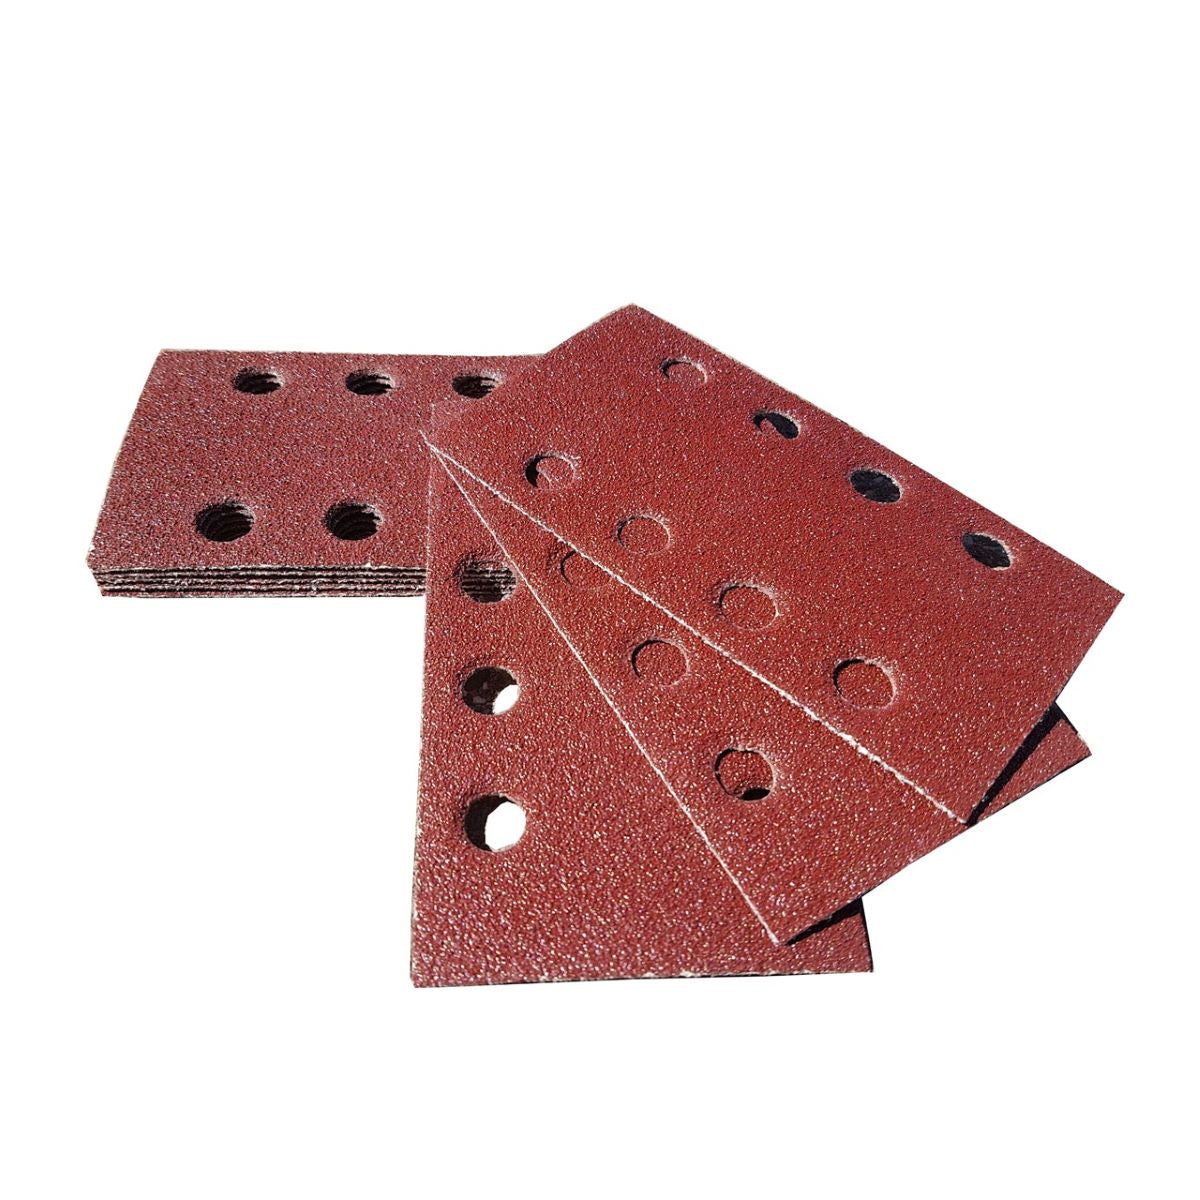 2 3/4" x 5" 8 Hole Small Handsander Red Aluminum Oxide Resin Hook Paper - per 100